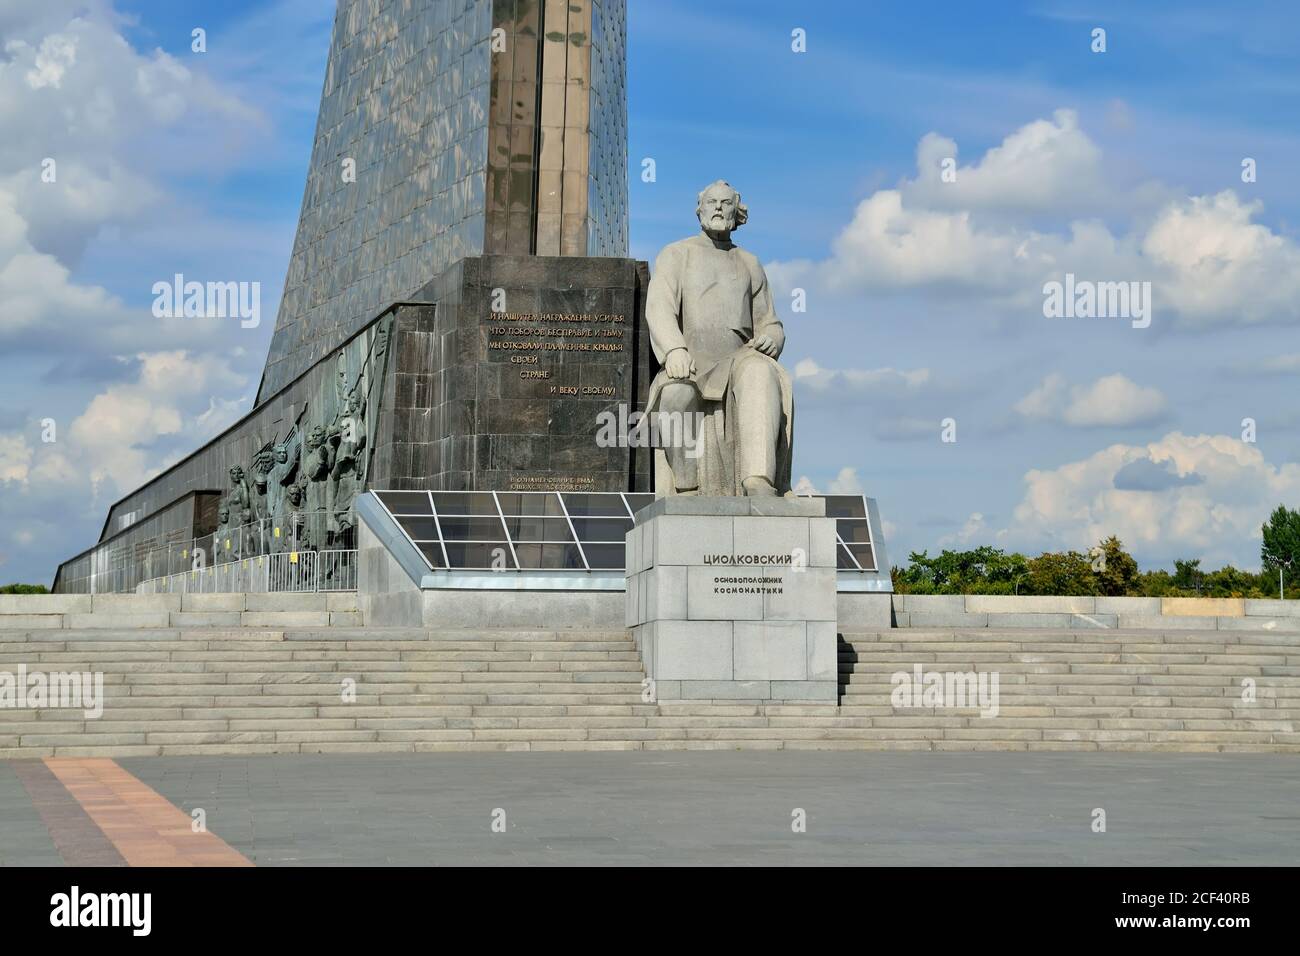 Moscou, Russie - 25 août 2020 : monument de Konstantin Eduardovich Tsiolkovsky, fondateur du cosmonautics au Musée de la Cosmonautics. Moscou, Russ Banque D'Images